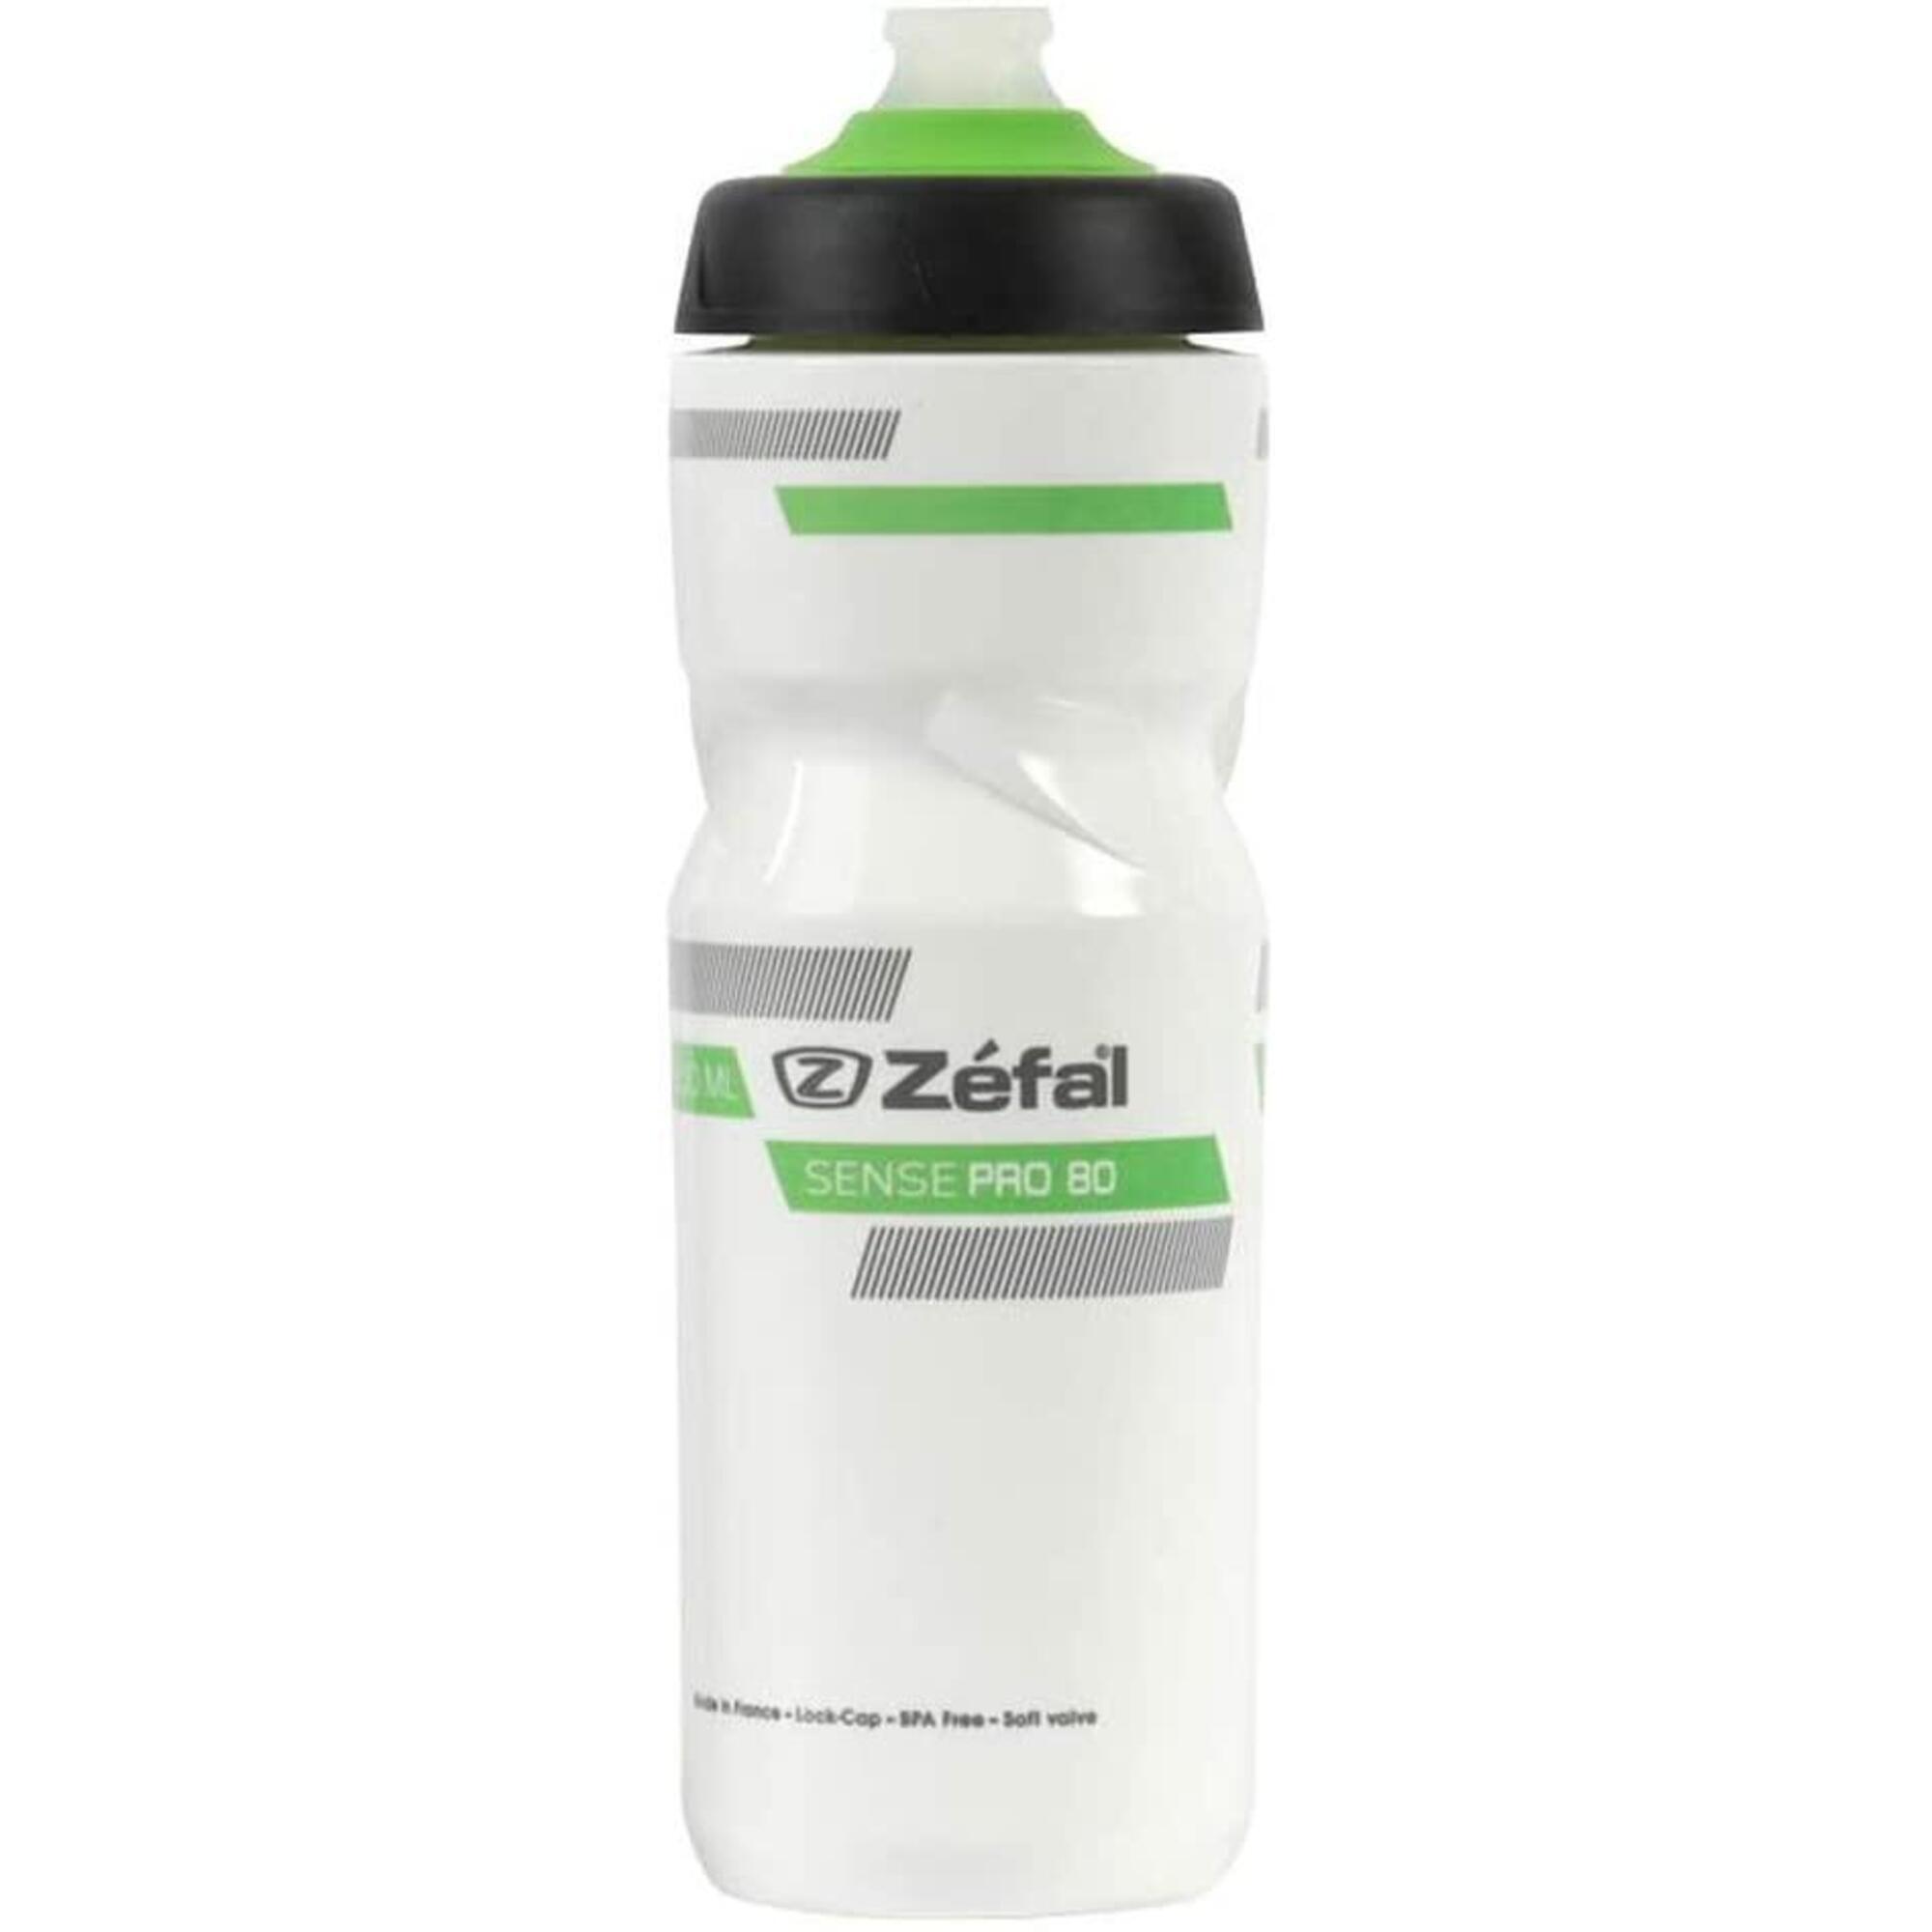 ZEFAL Zefal Sense Pro 80 Water Bottle - White